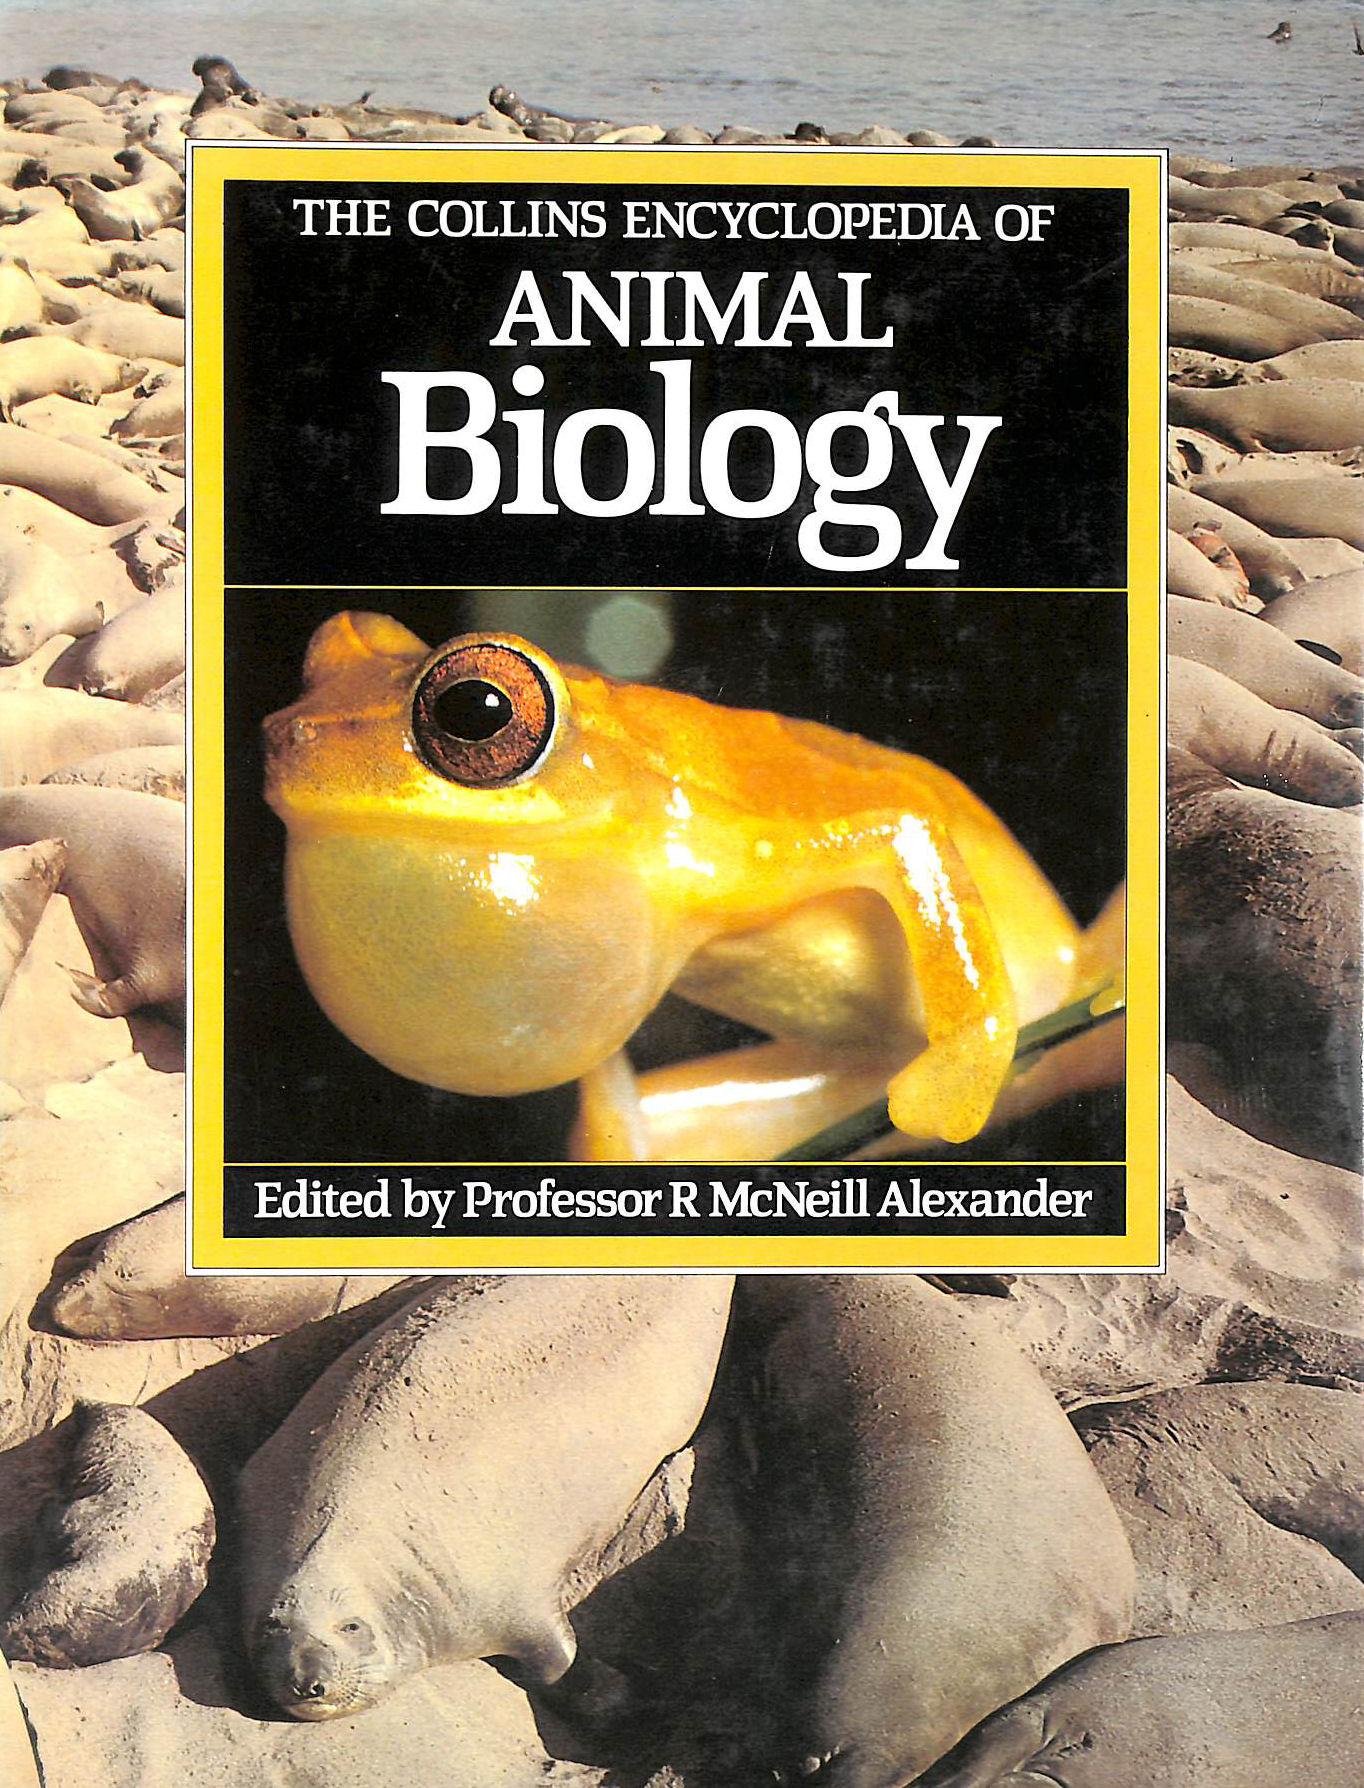 ALEXANDER, R.MCNEILL [EDITOR] - Encyclopaedia of Animal Biology (Animal Encyclopaedia S.)